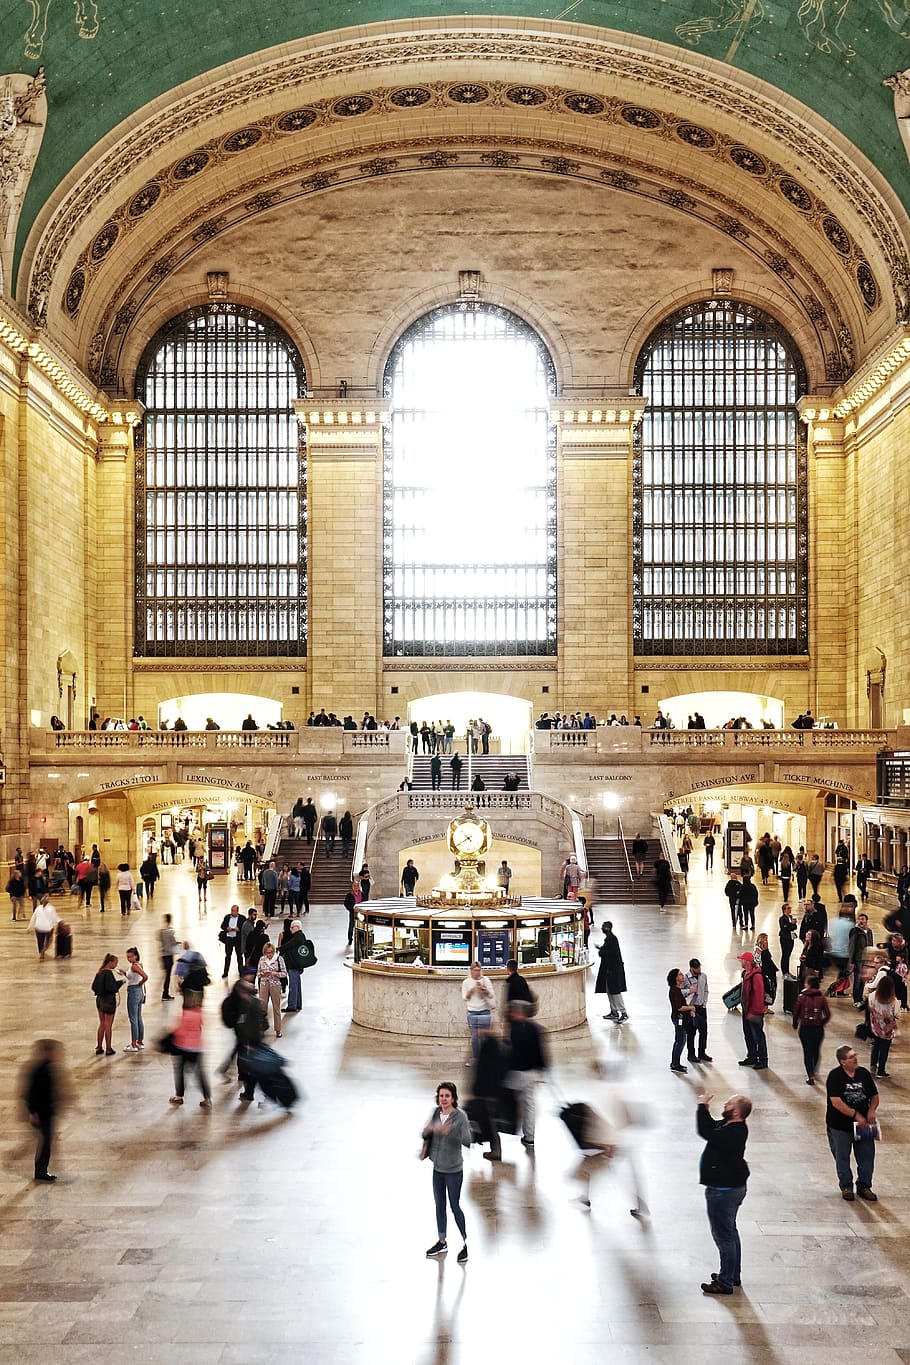 Grand Central Station Pictures  Download Free Images on Unsplash